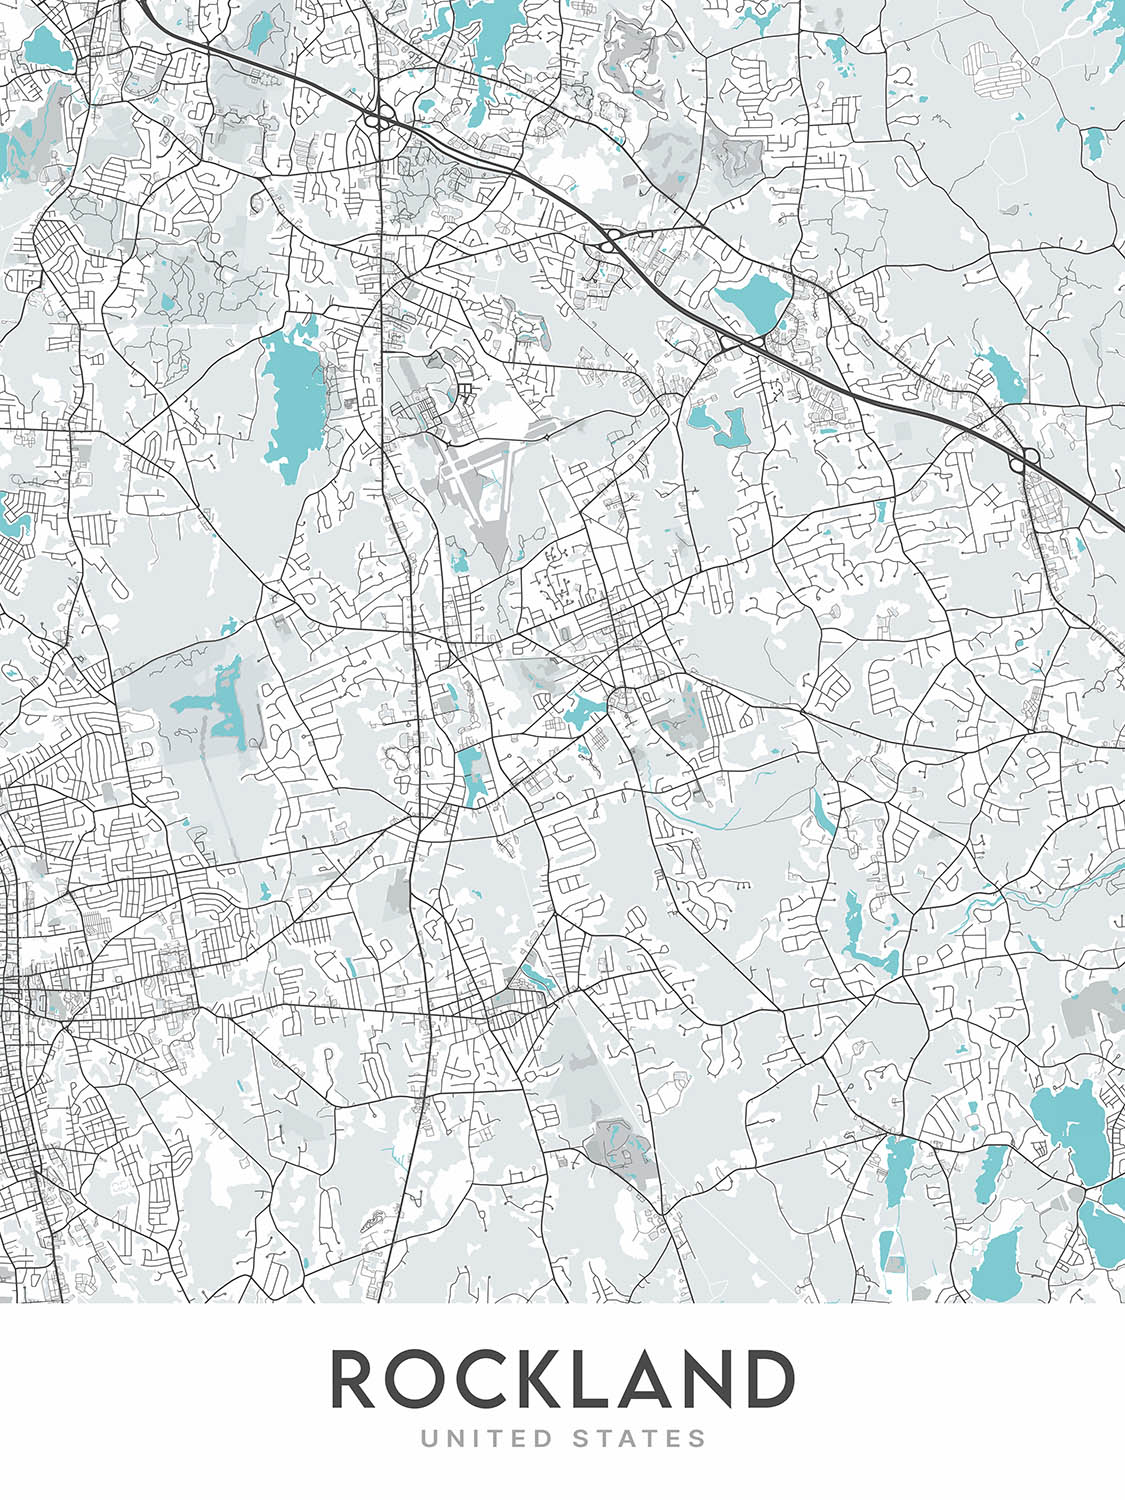 Mapa moderno de la ciudad de Rockland, MA: Hanover, Union Street, Summer Street, Liberty Street, Reed Street